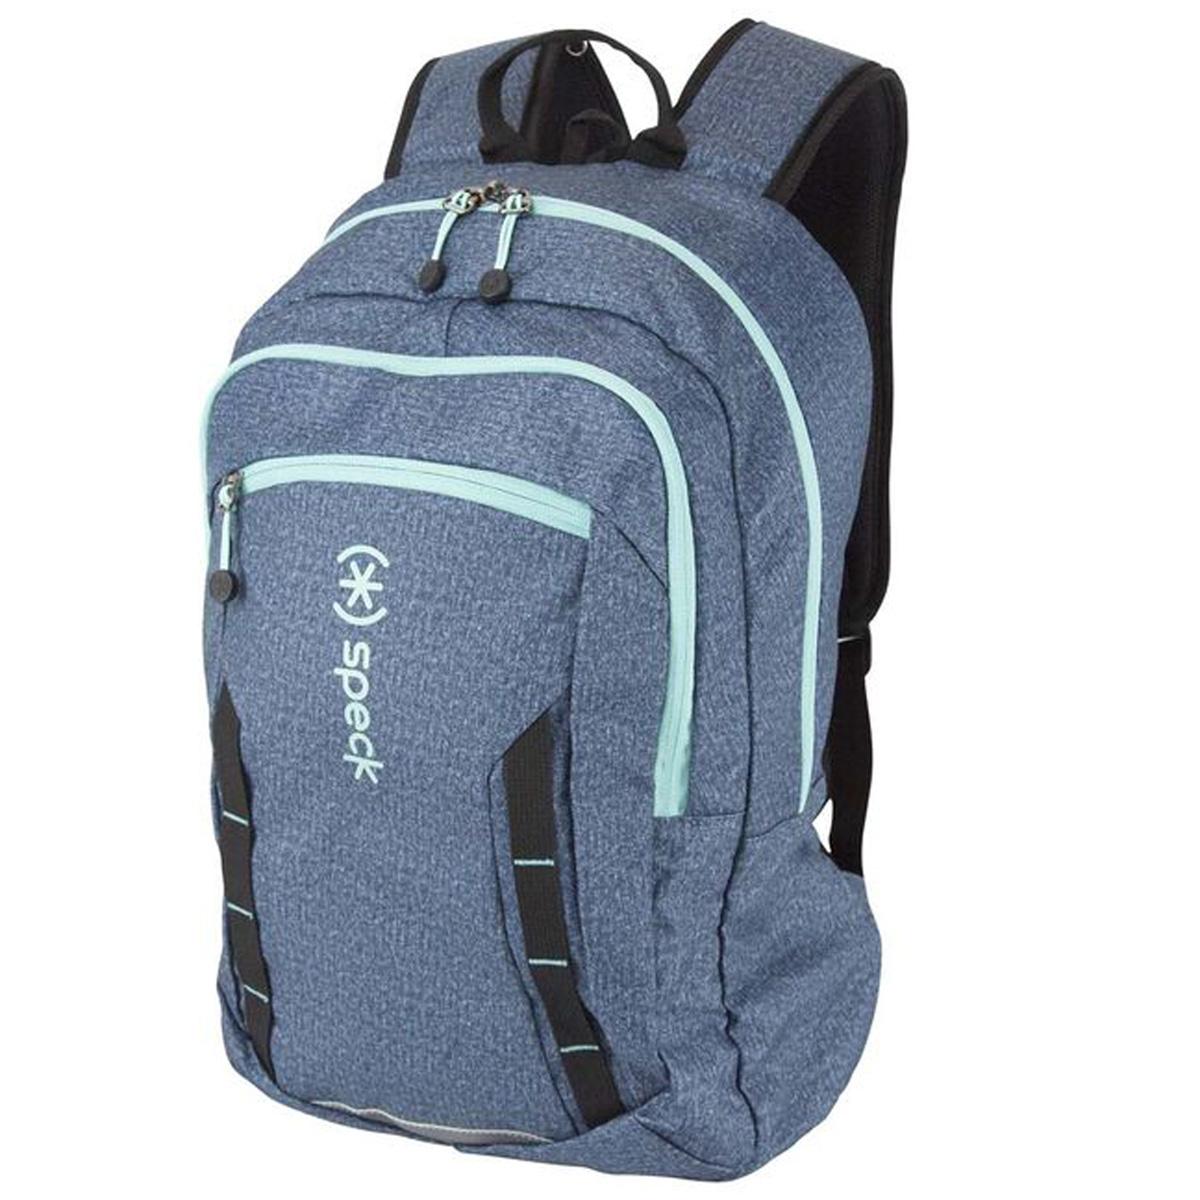 Speck Prep Backpack for $9.97 Shipped